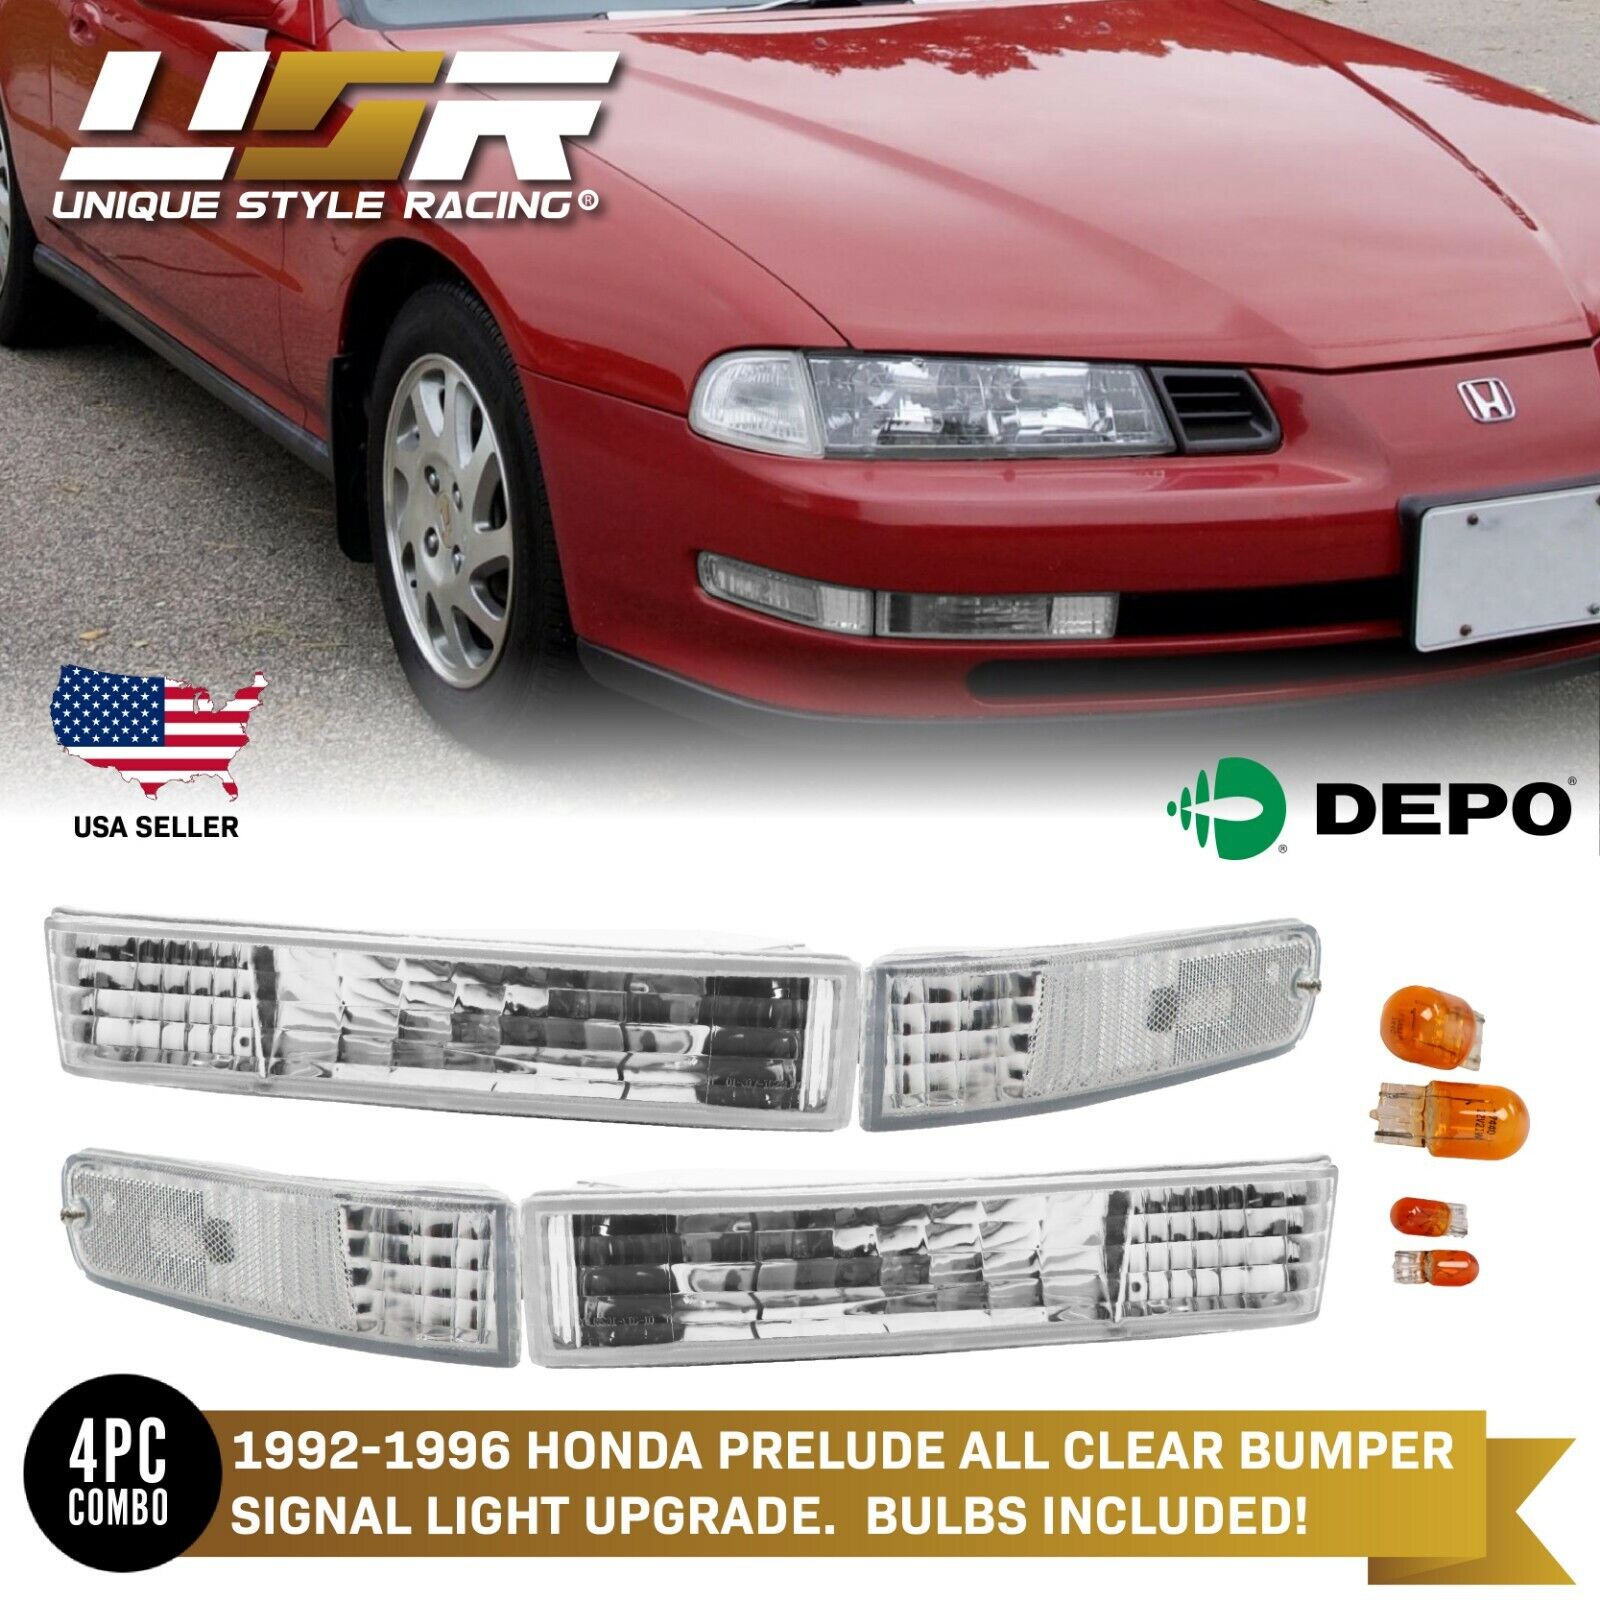 4PCS DEPO COMBO Set Clear Bumper Signal Lights Fit For 1992-1996 Honda Prelude